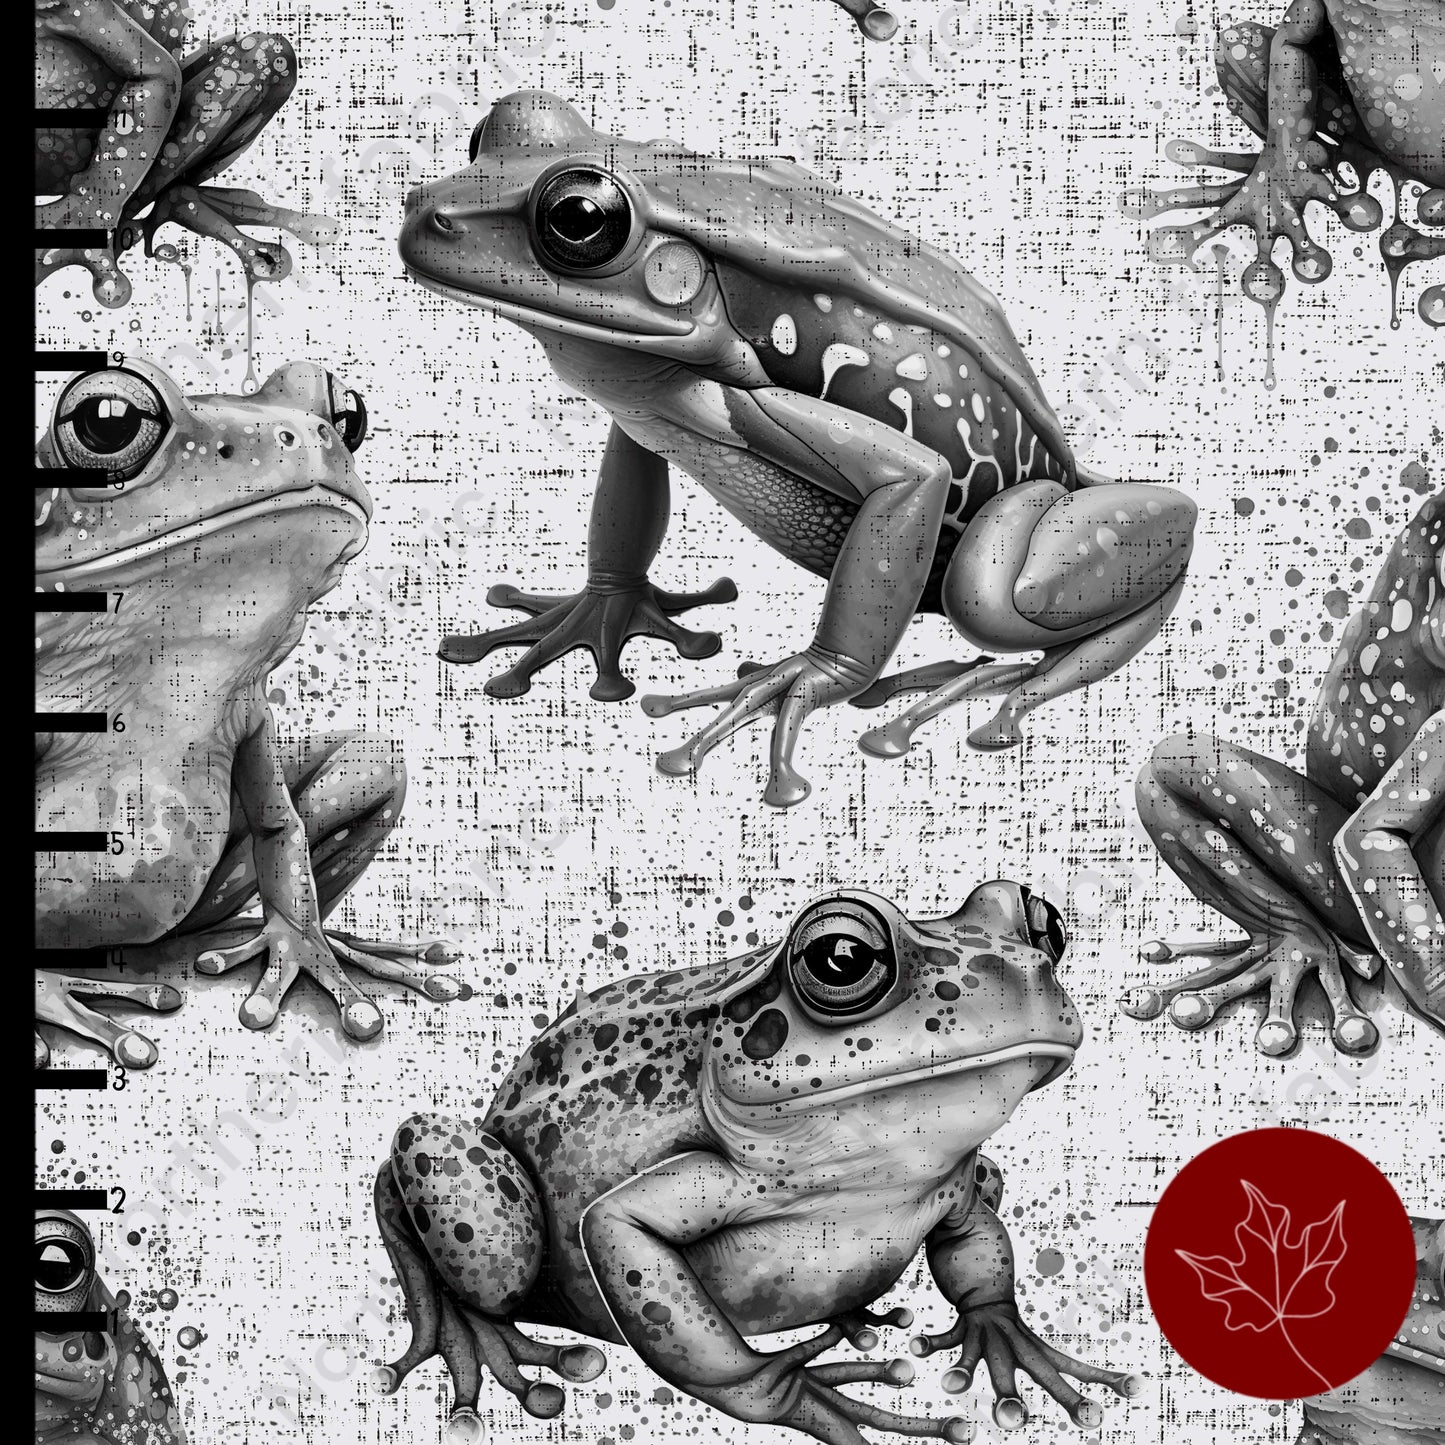 Monochrome frogs